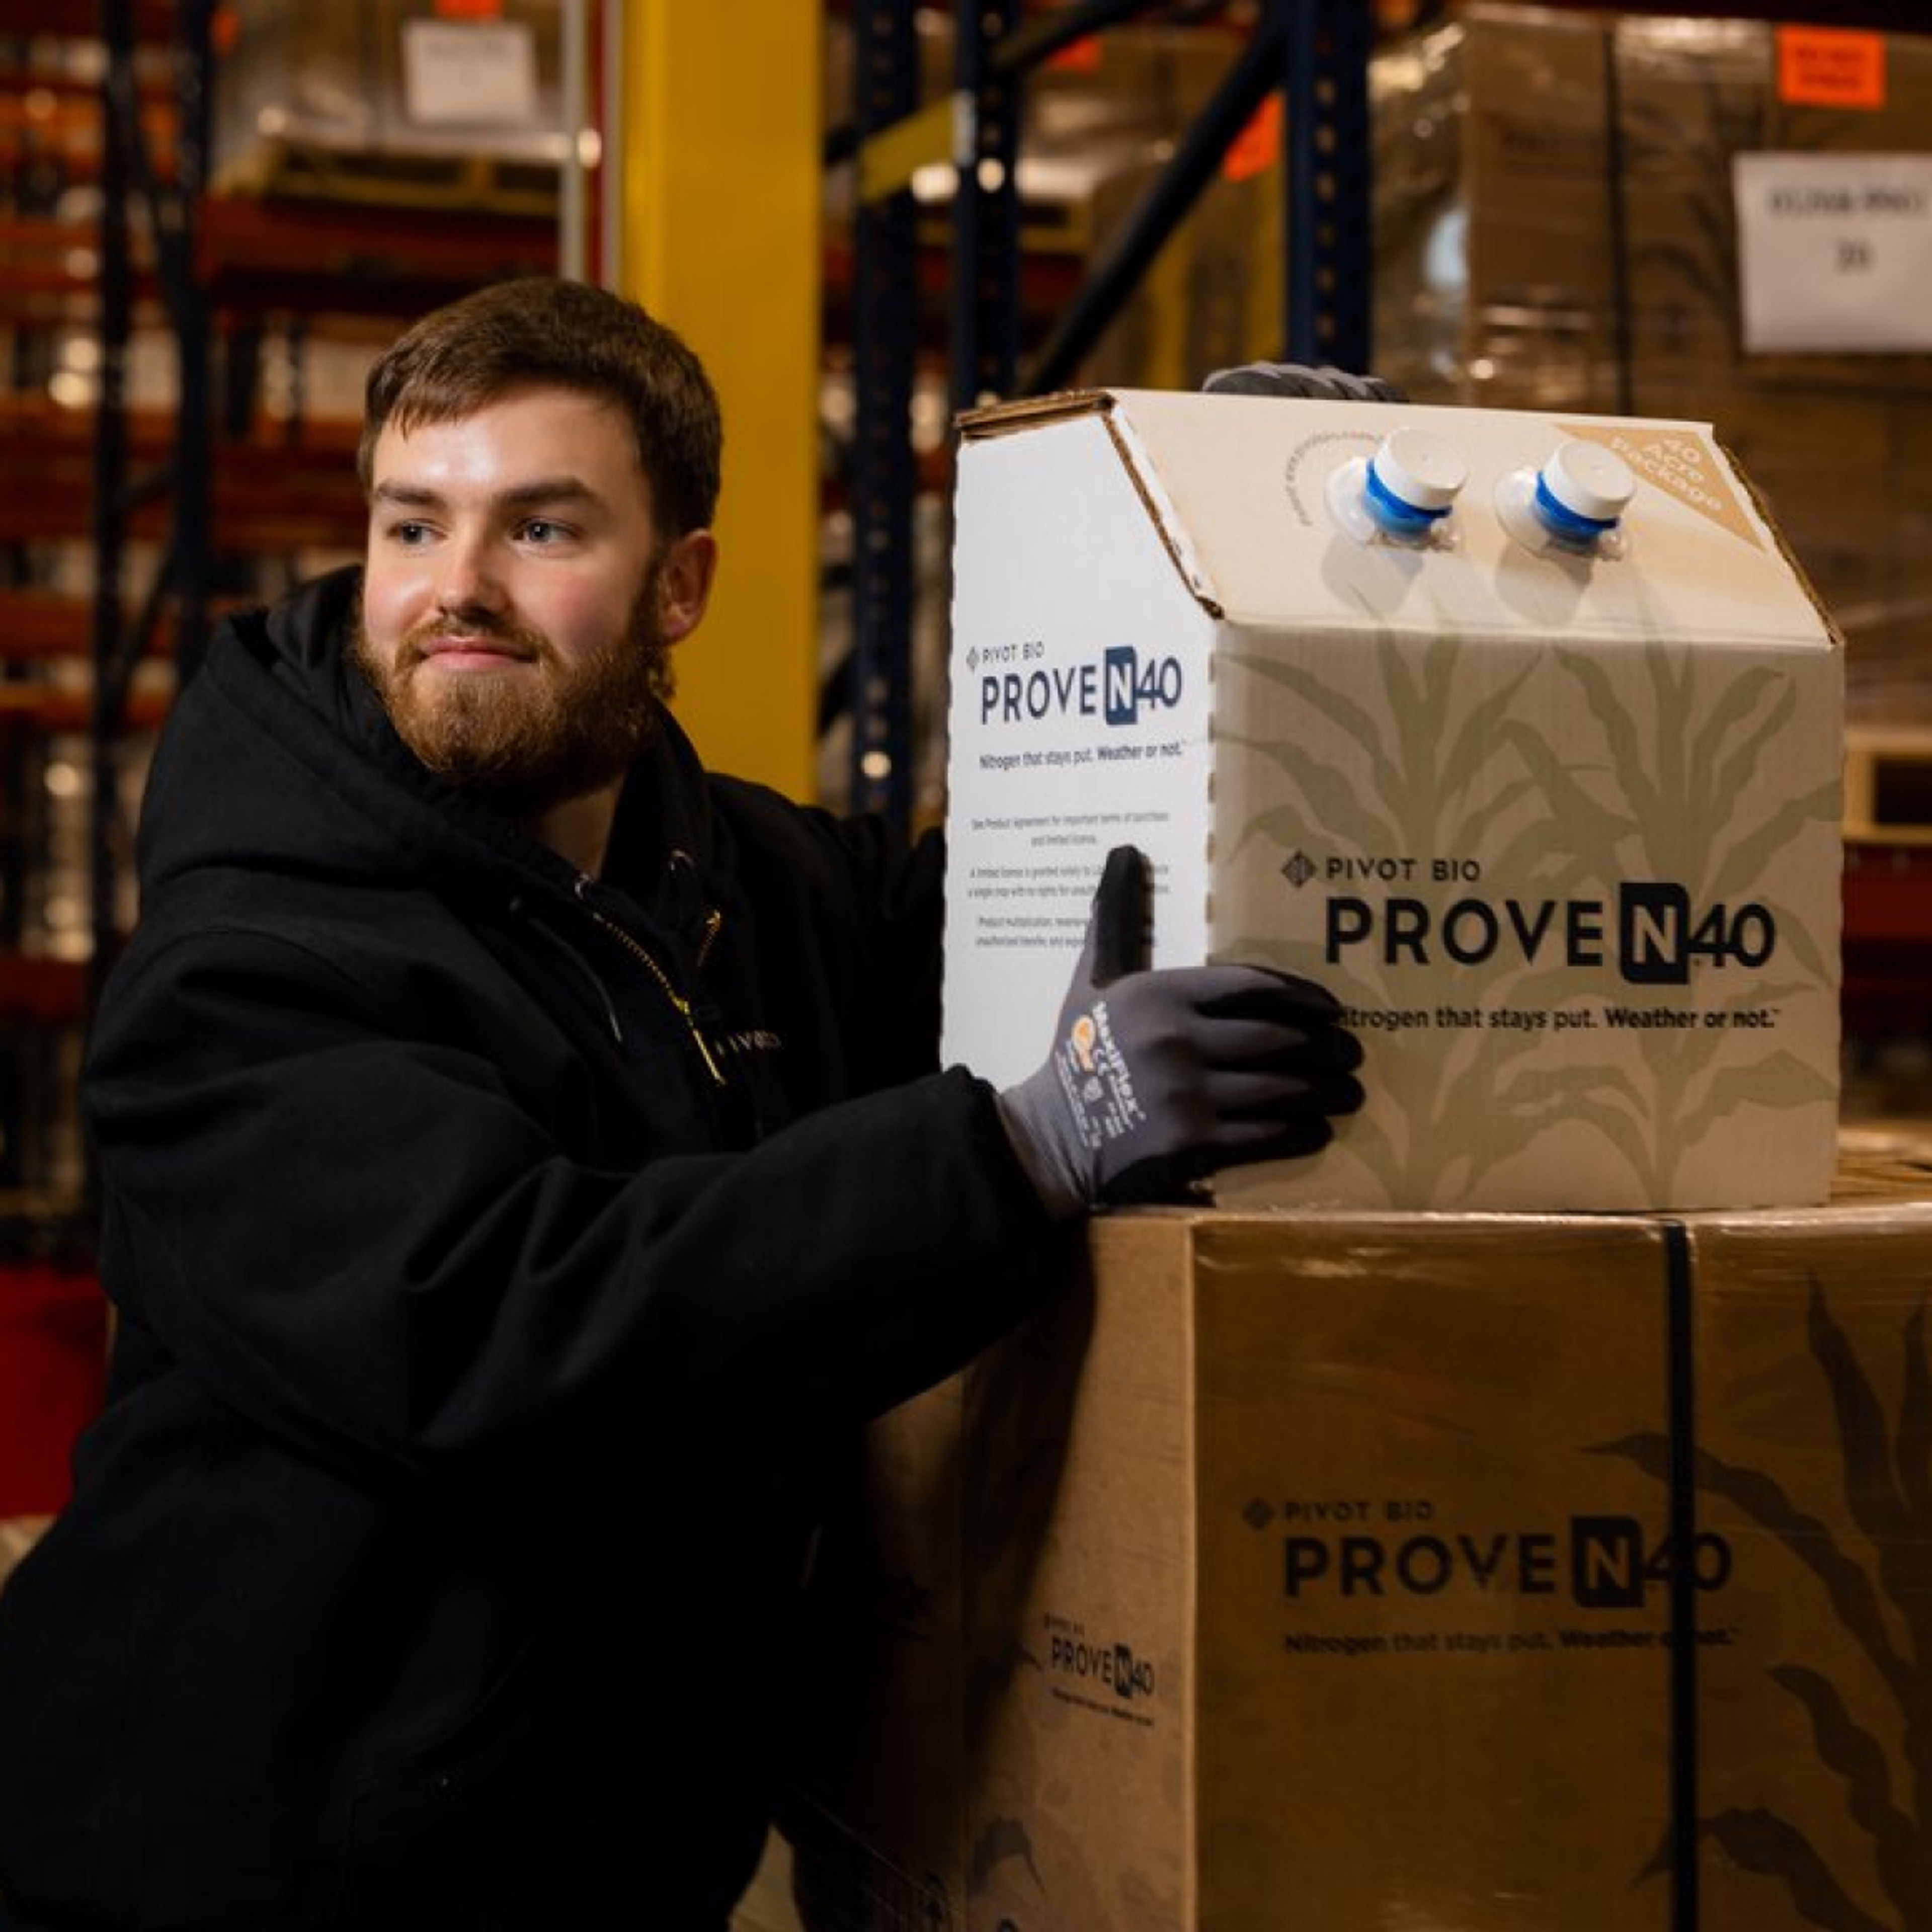 Pivot Bio fulfillment center employee holding a Proven 40 box